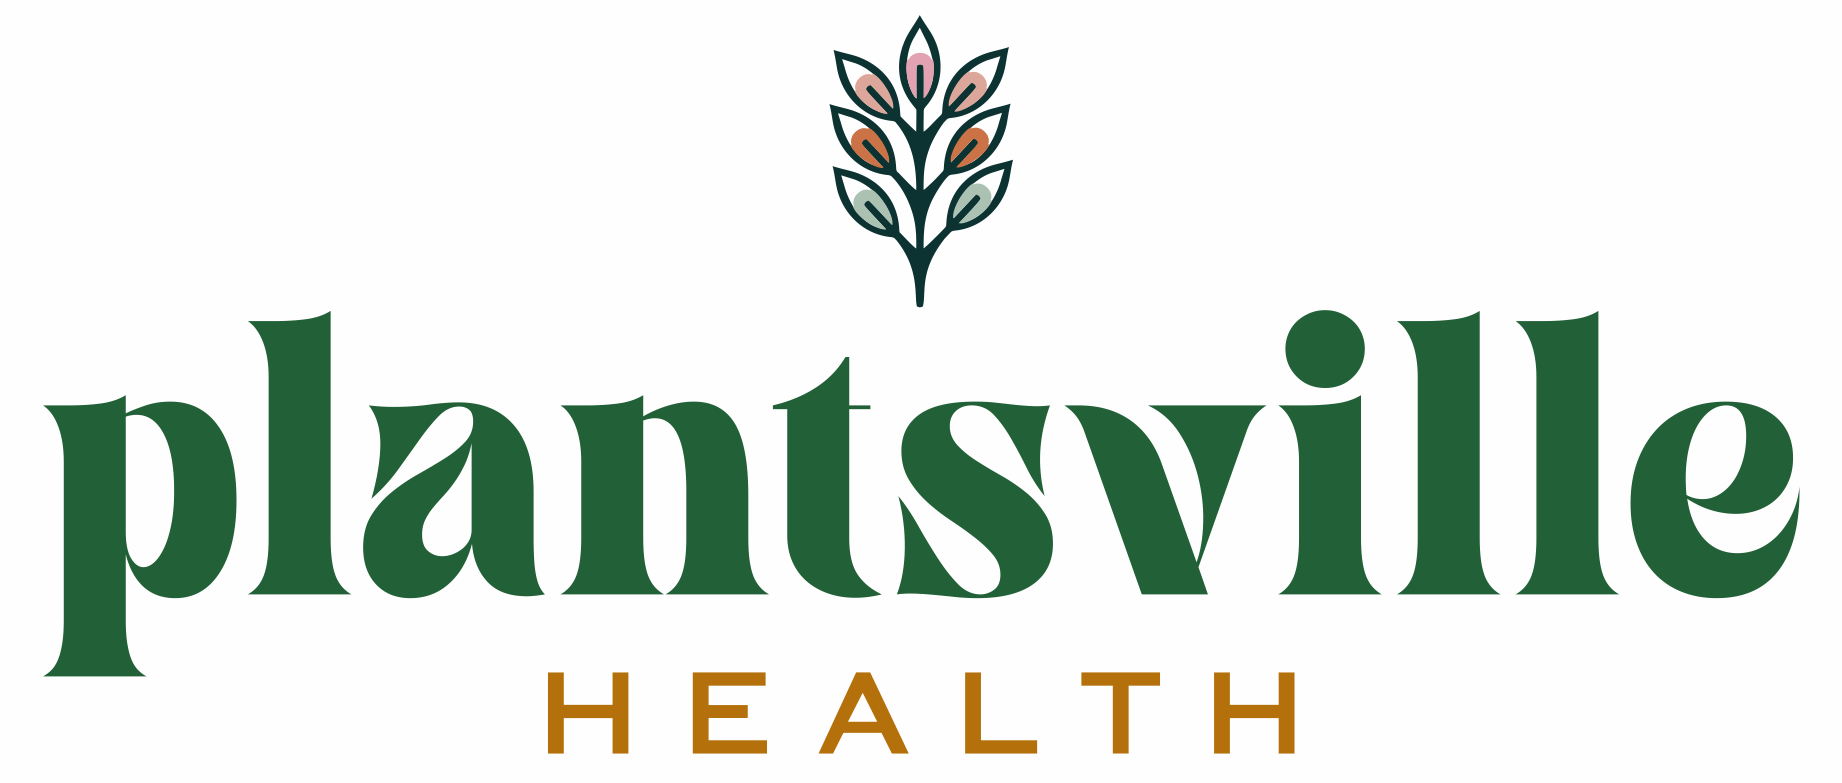 Plantsville Health